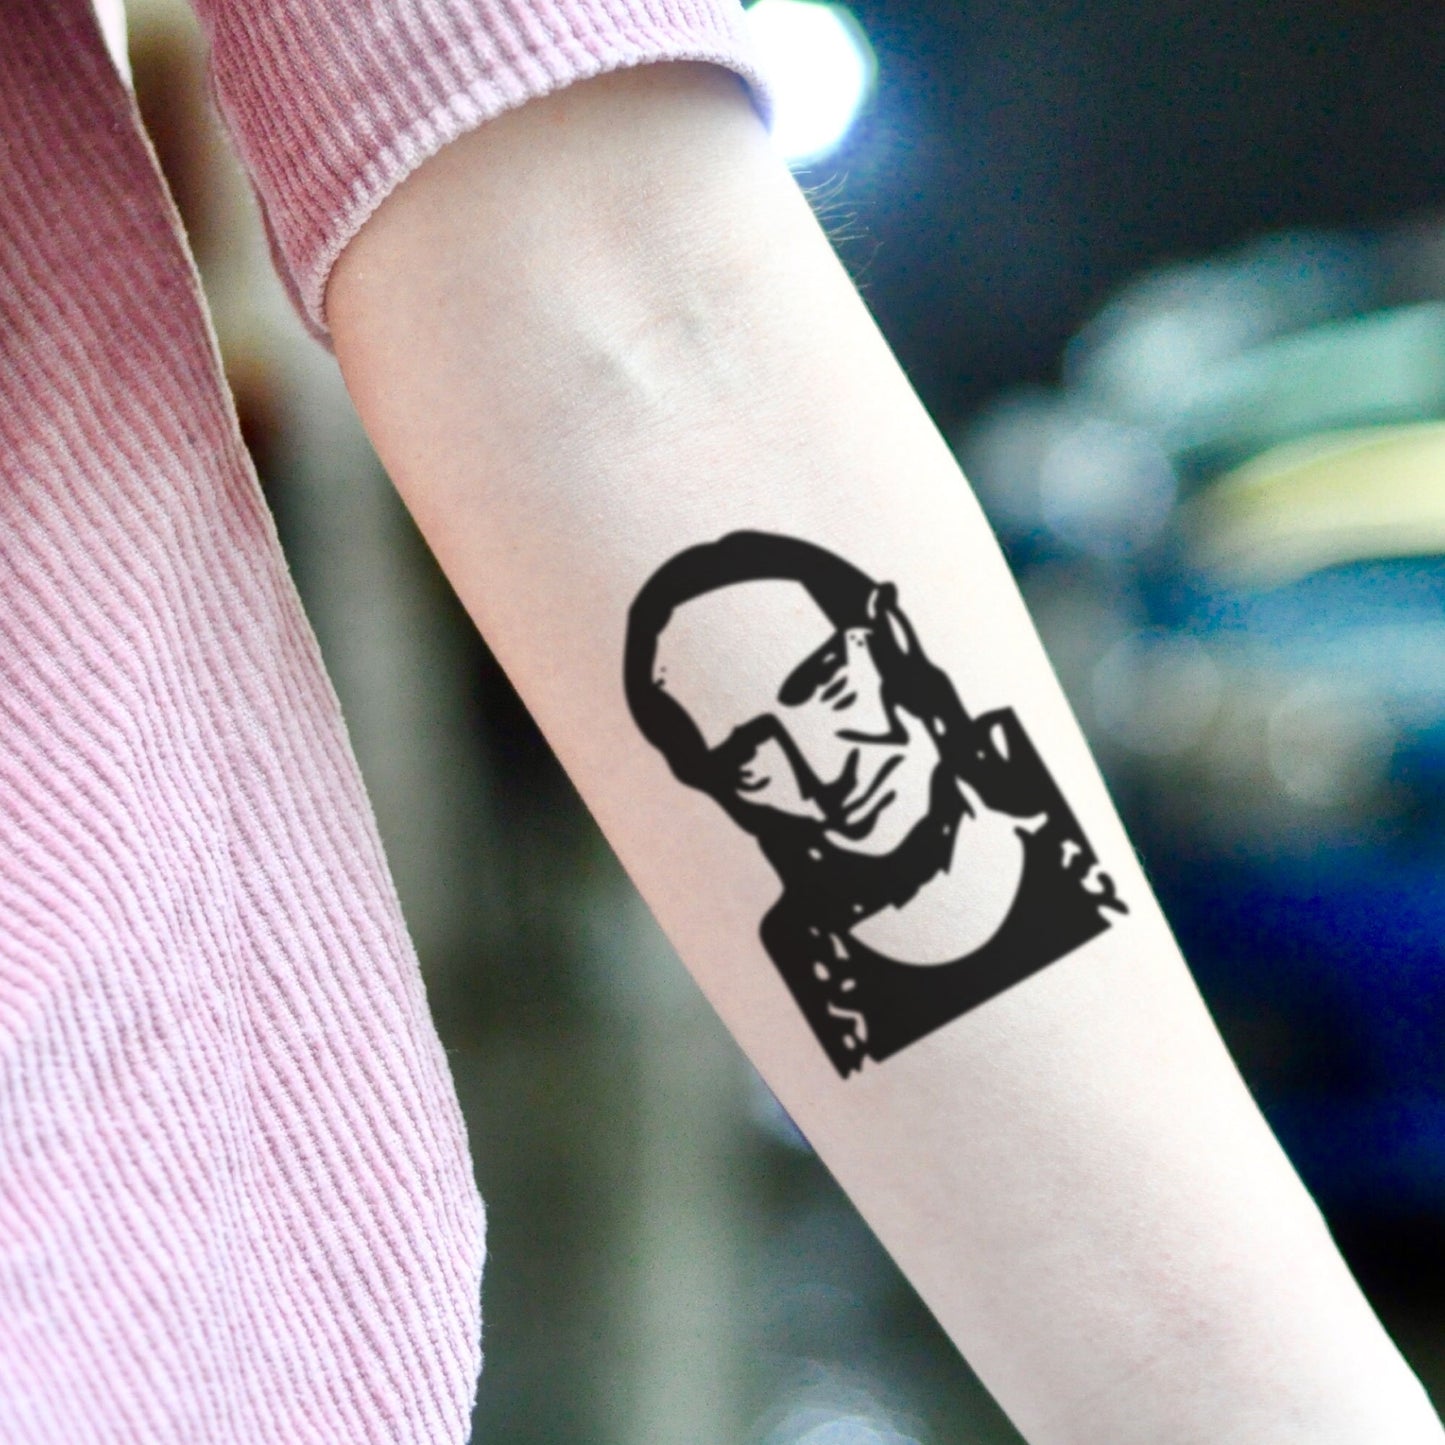 fake small willie nelson portrait temporary tattoo sticker design idea on inner arm